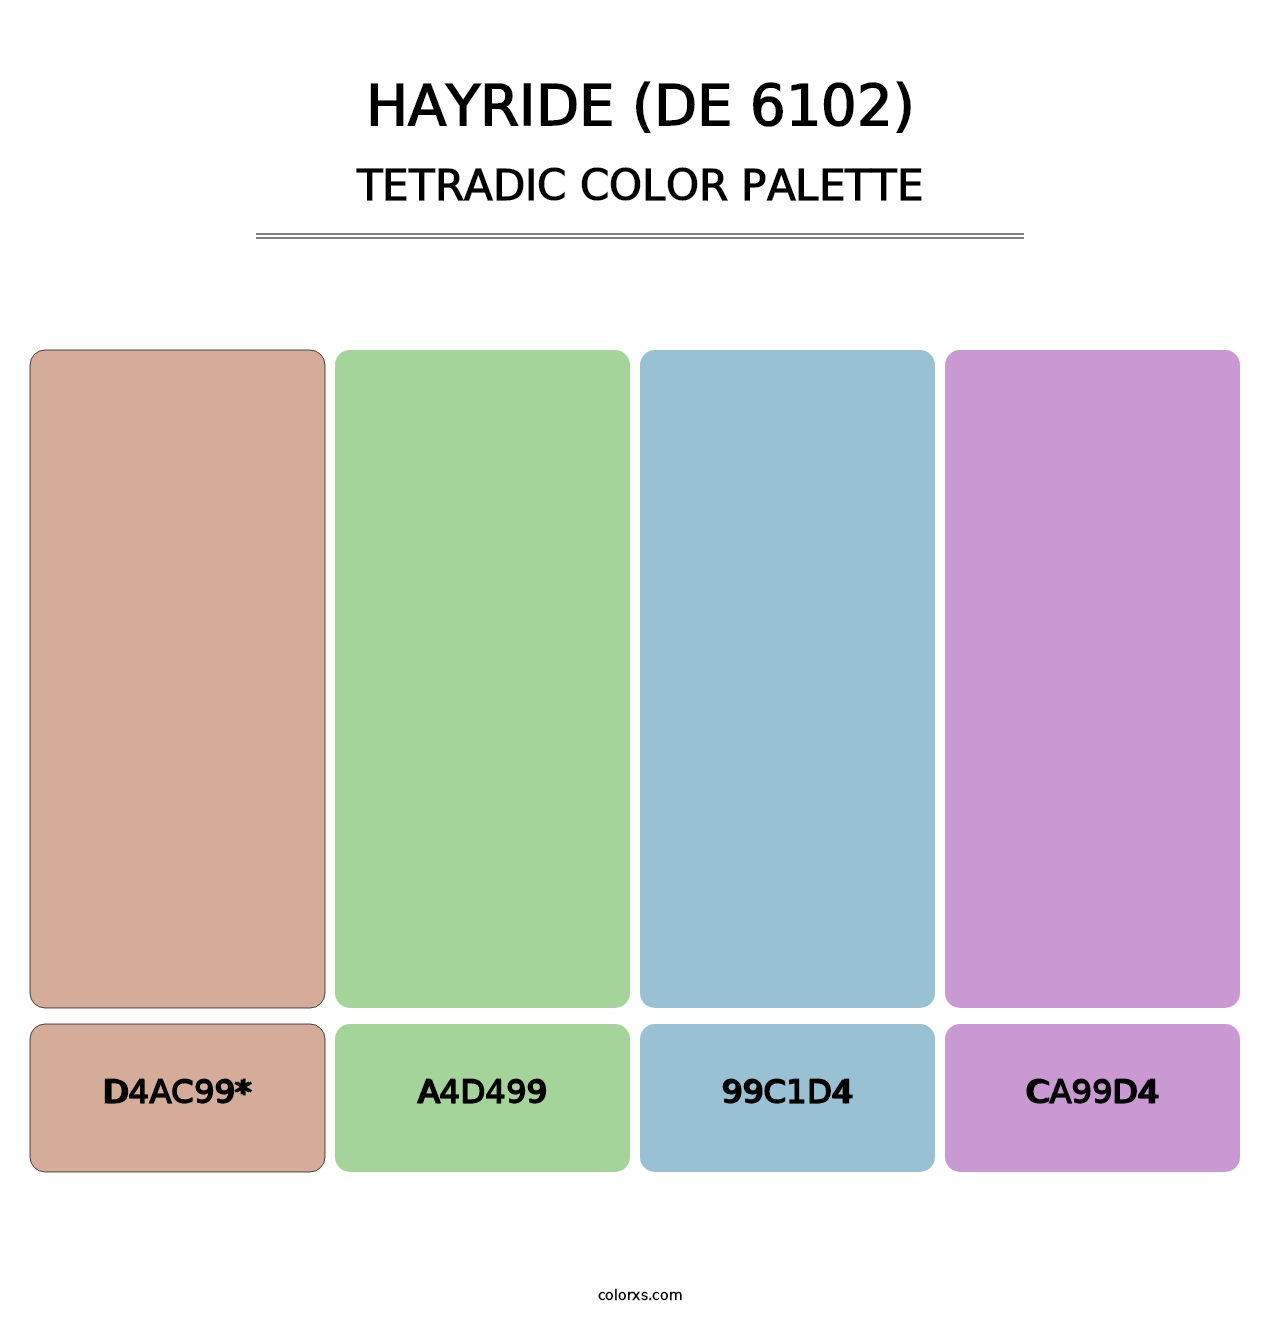 Hayride (DE 6102) - Tetradic Color Palette